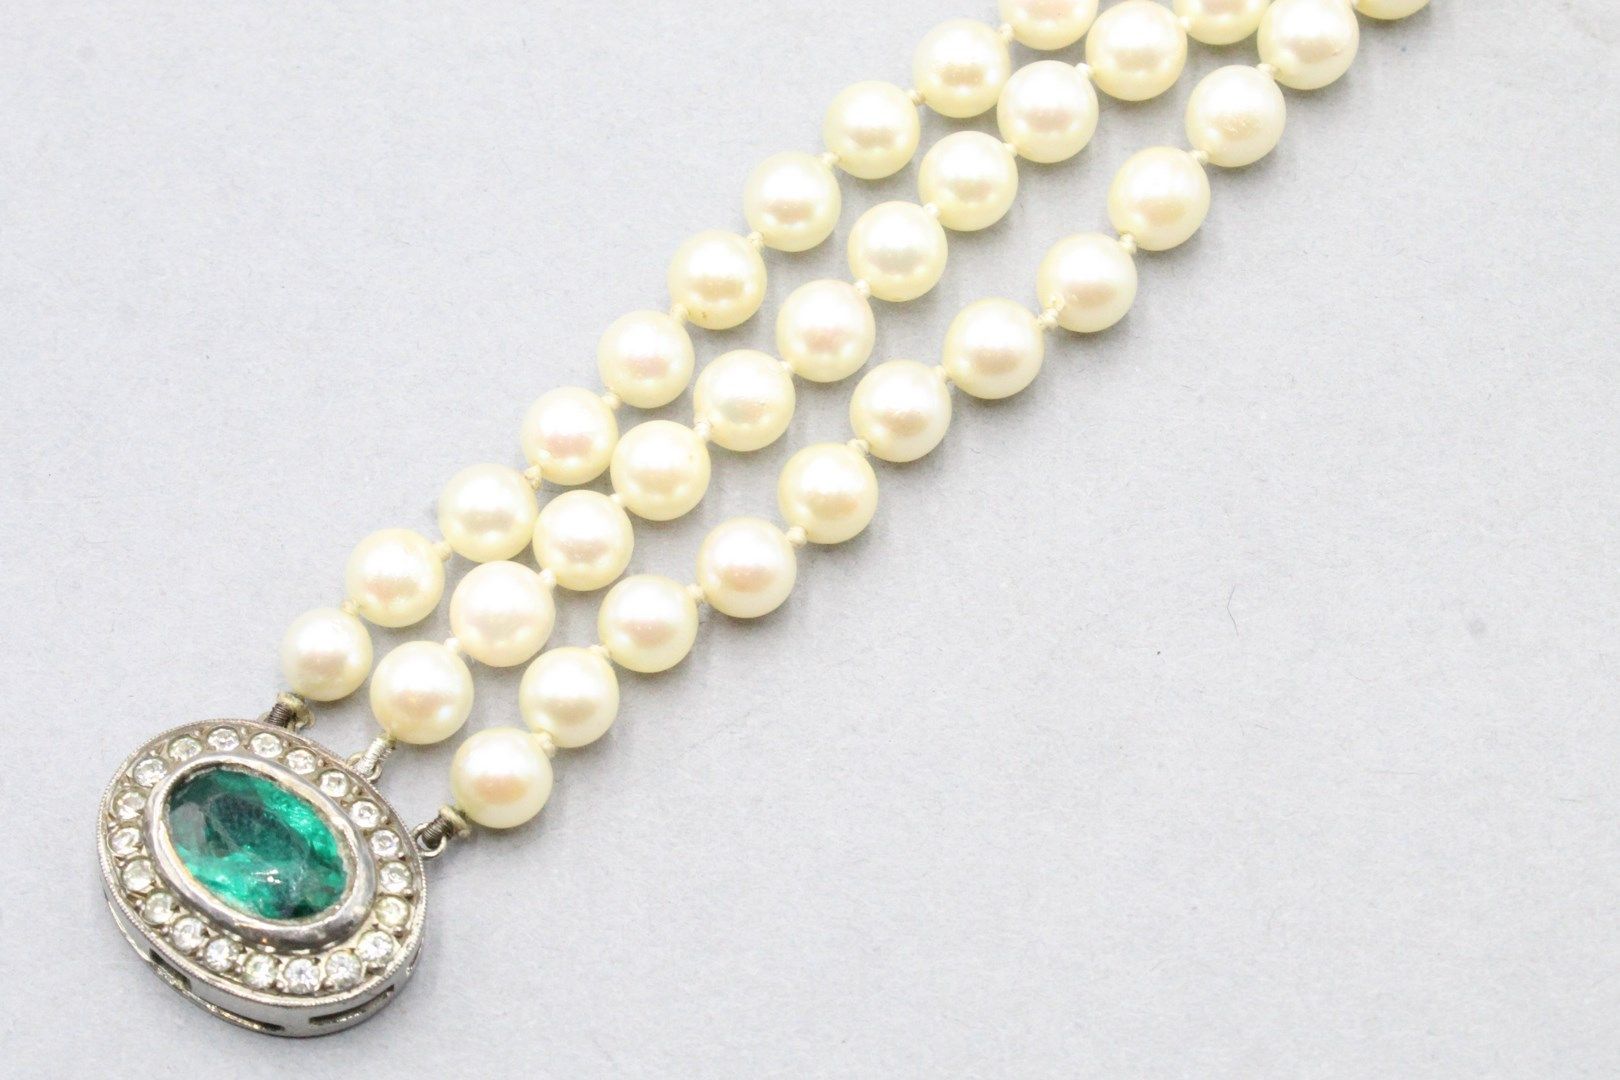 Null 手链上有三排choker珠子。银色的扣子上装饰着白色石头镶嵌的绿色仿石（玻璃）。一颗要穿的珍珠被挂在上面。

毛重：24克。

(对一个行的损害)